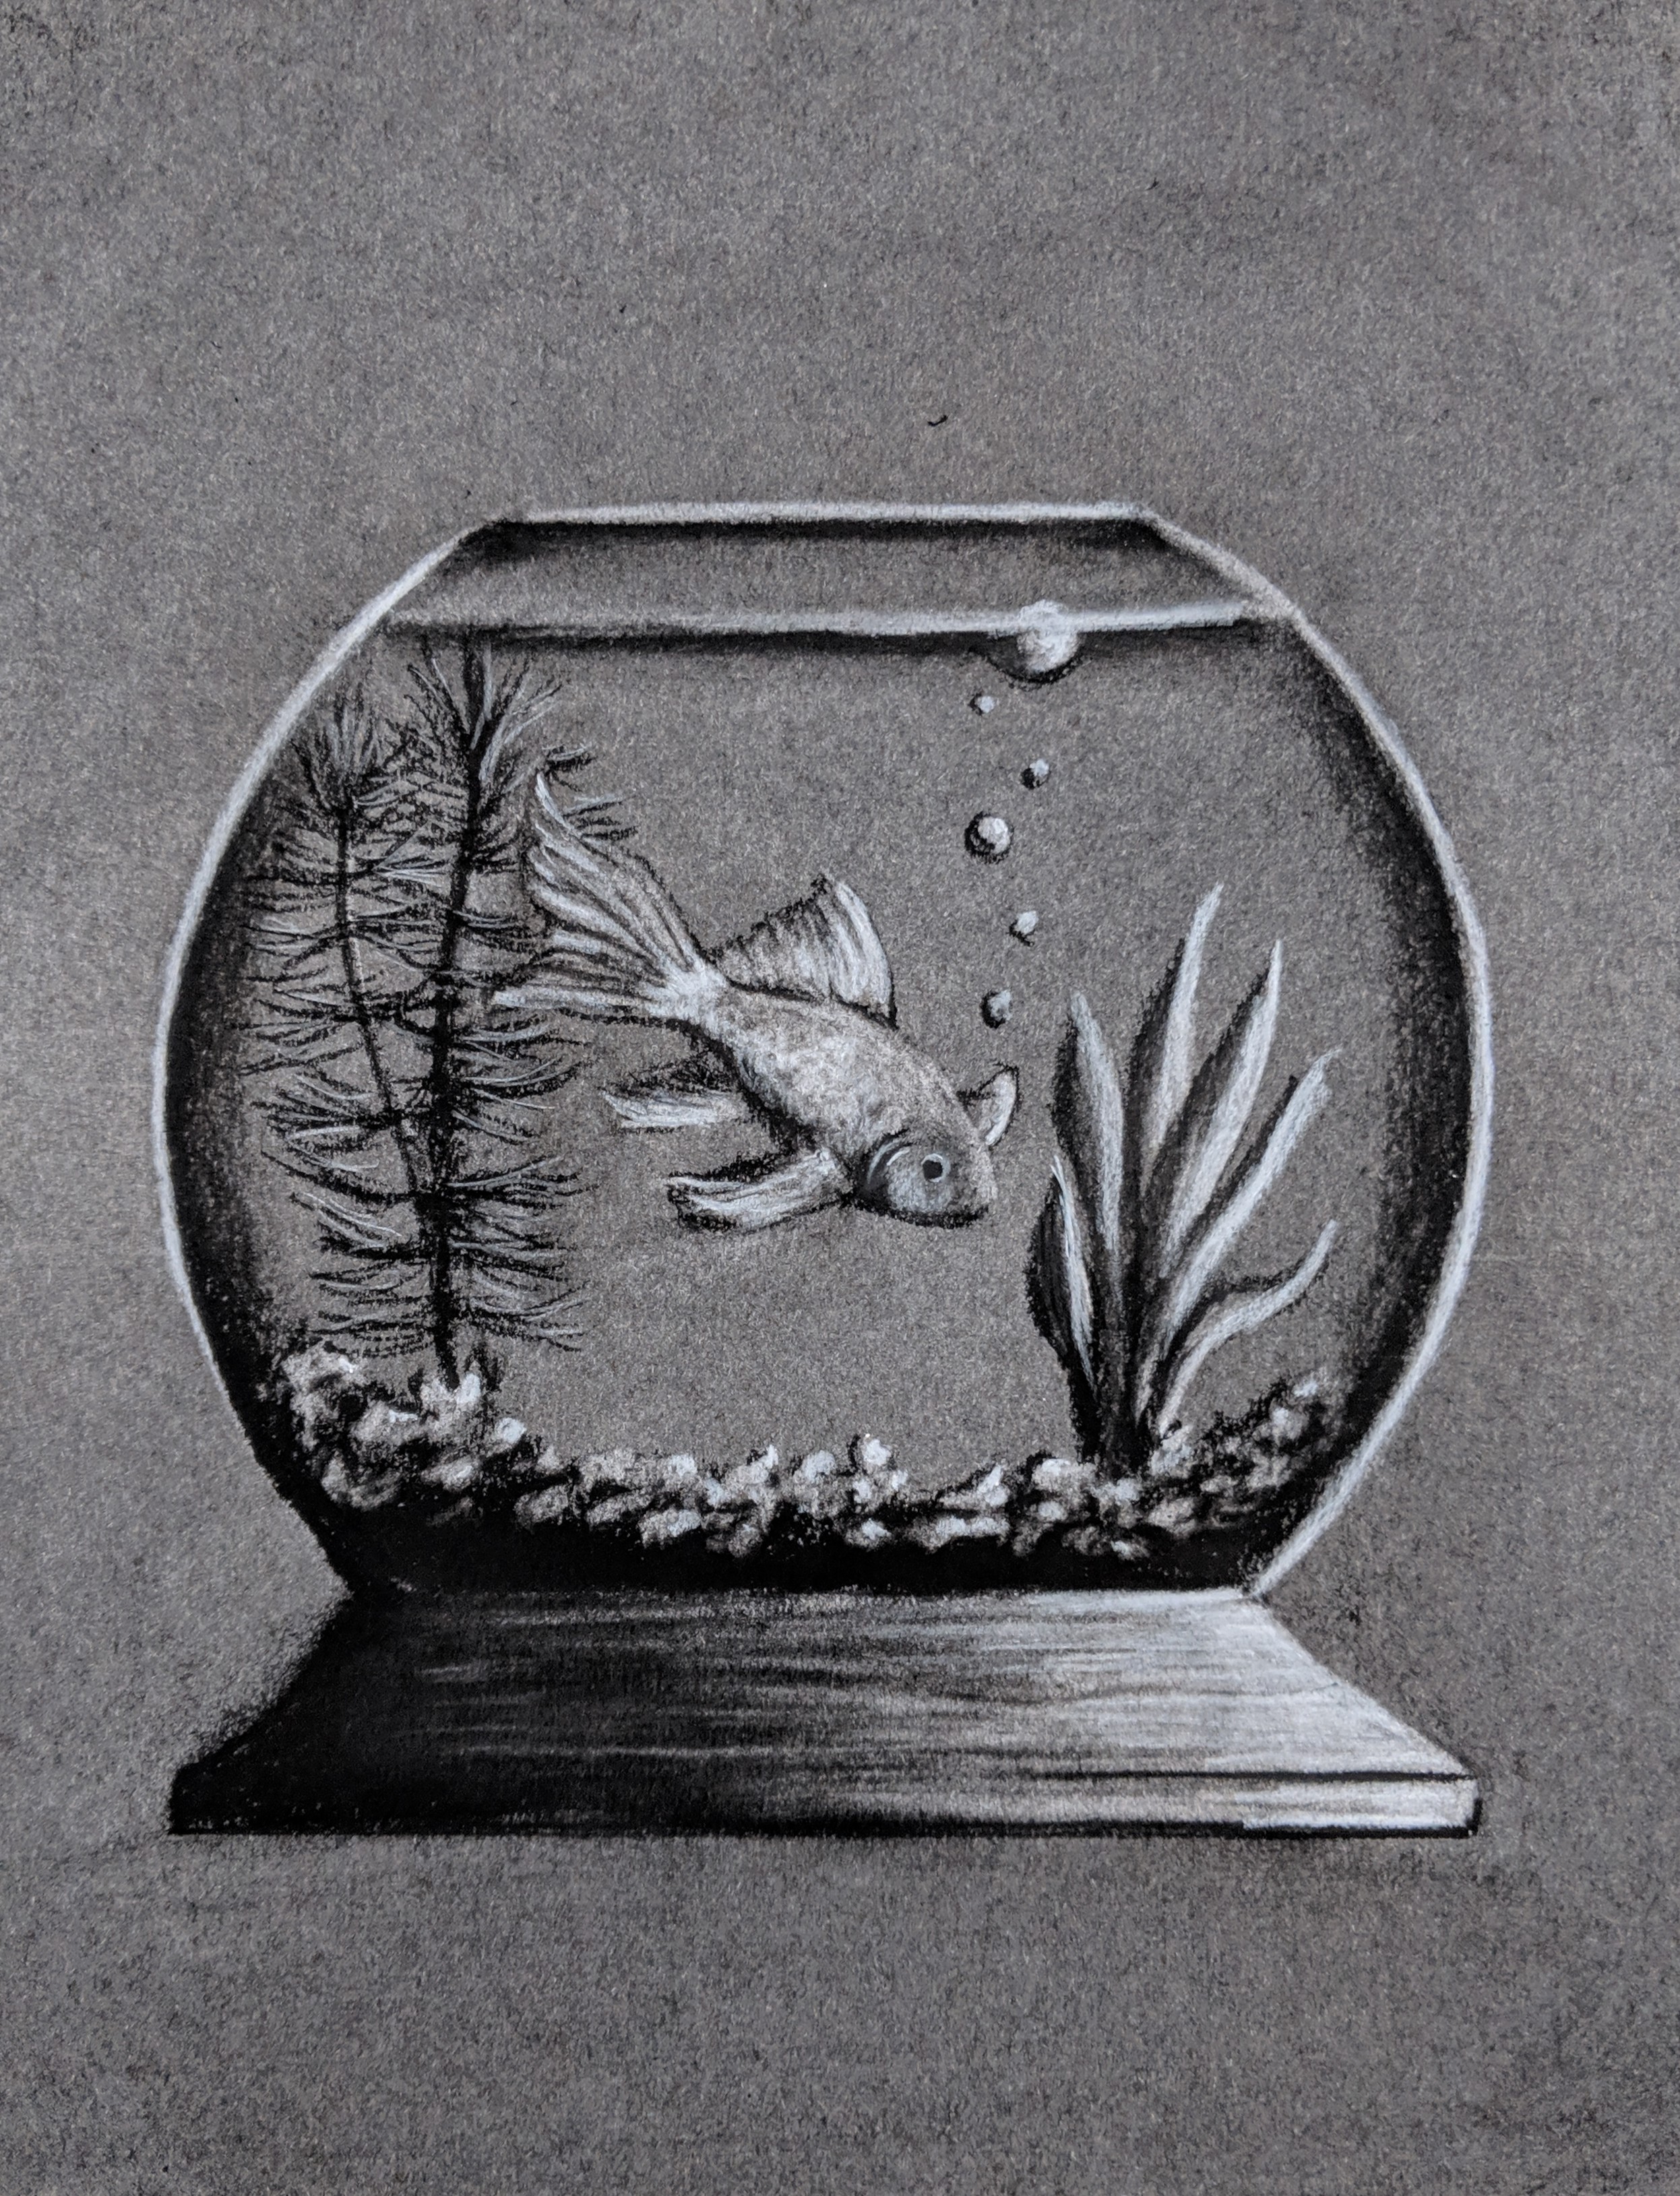 276-fish-bowl.jpg